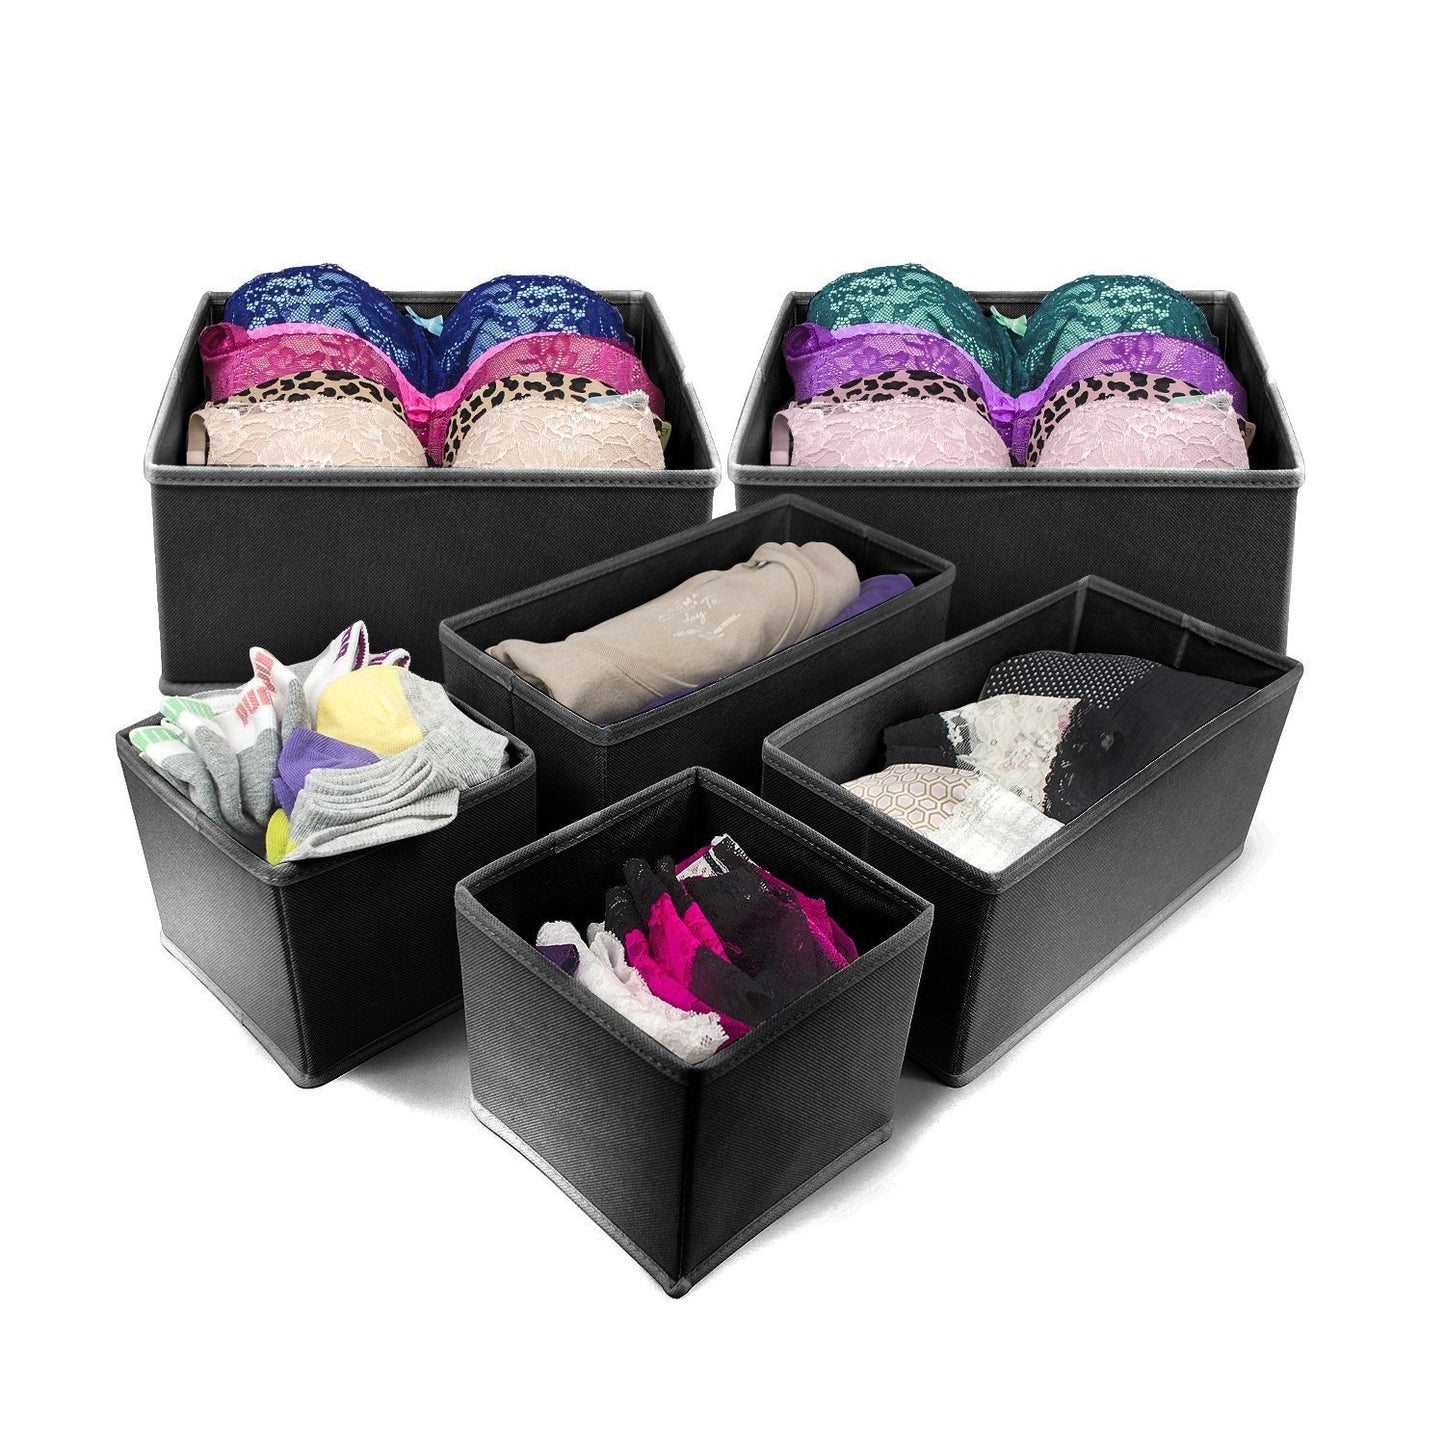 Storage sorbus foldable storage drawer closet dresser organizer bins for underwear bras socks ties scarves accessories and more 6 piece set black